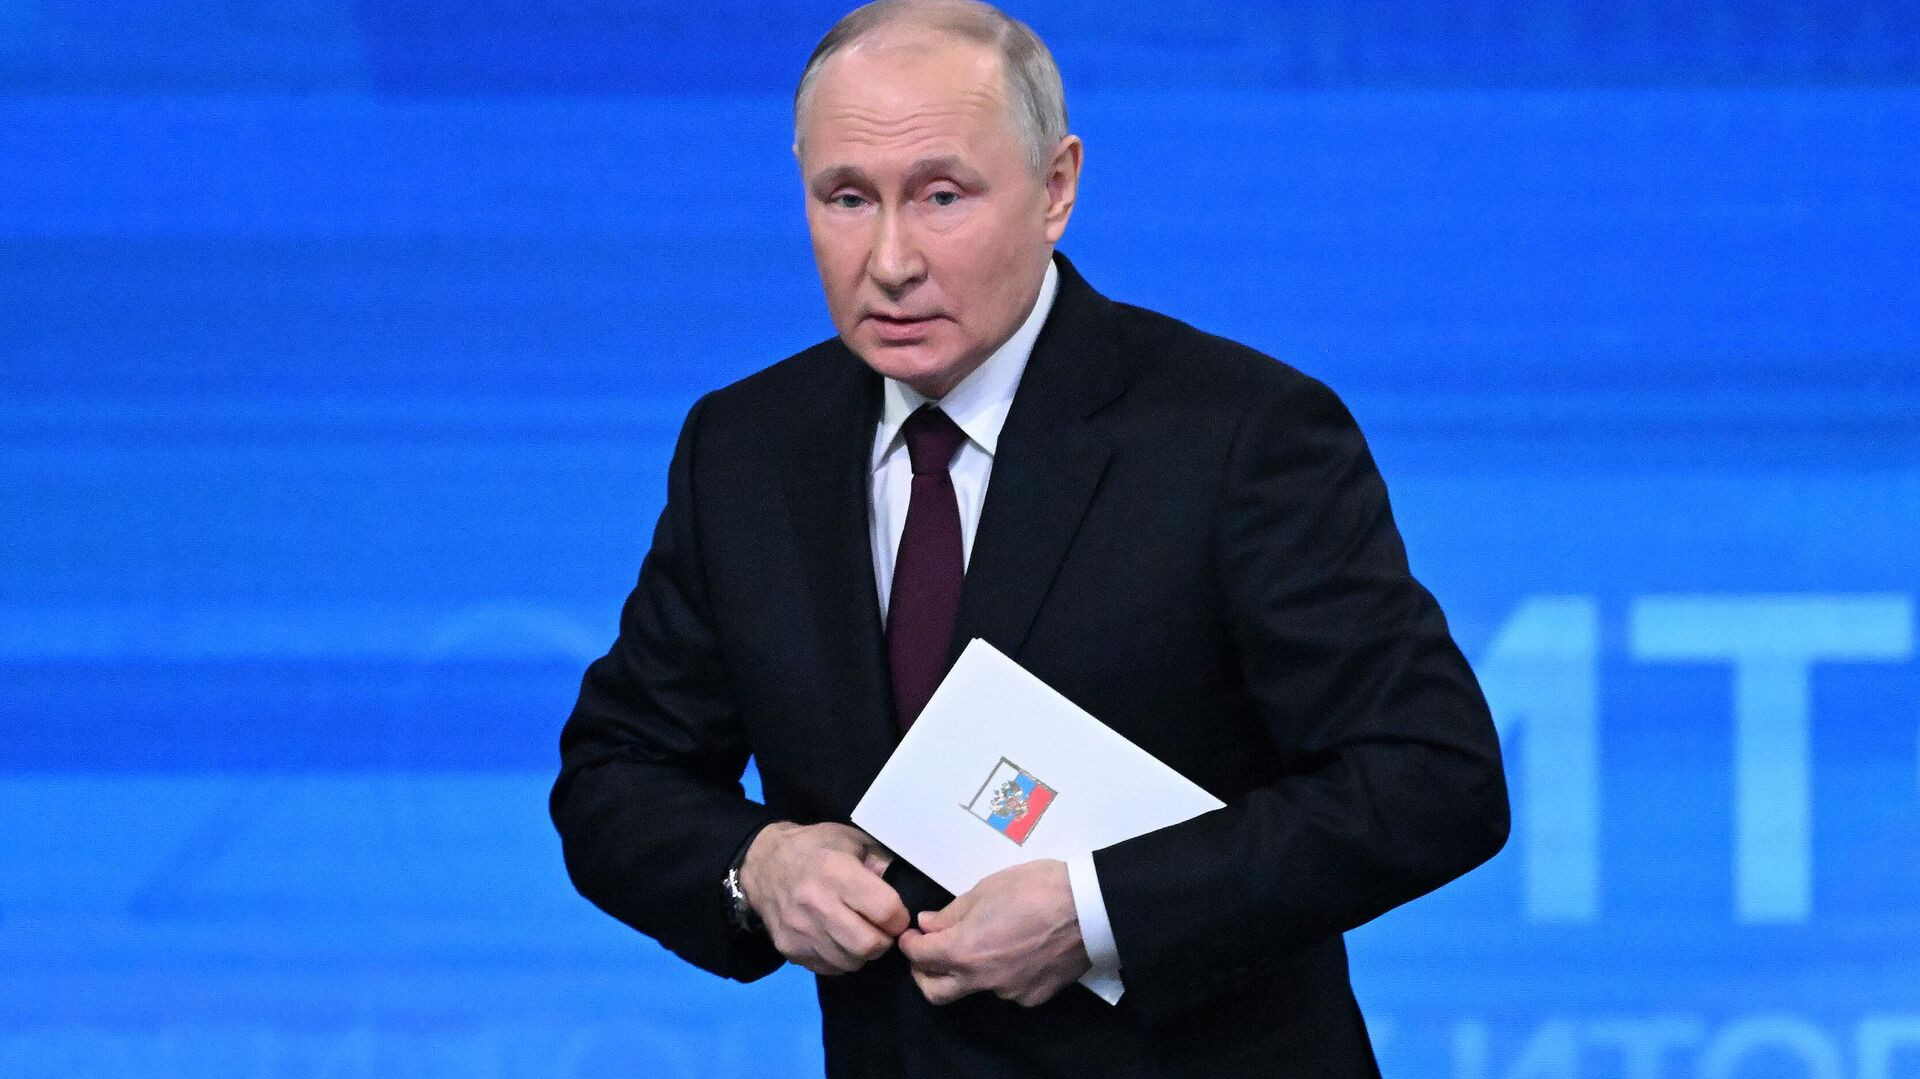 Putin: "Russia nears cancer vaccines developing"